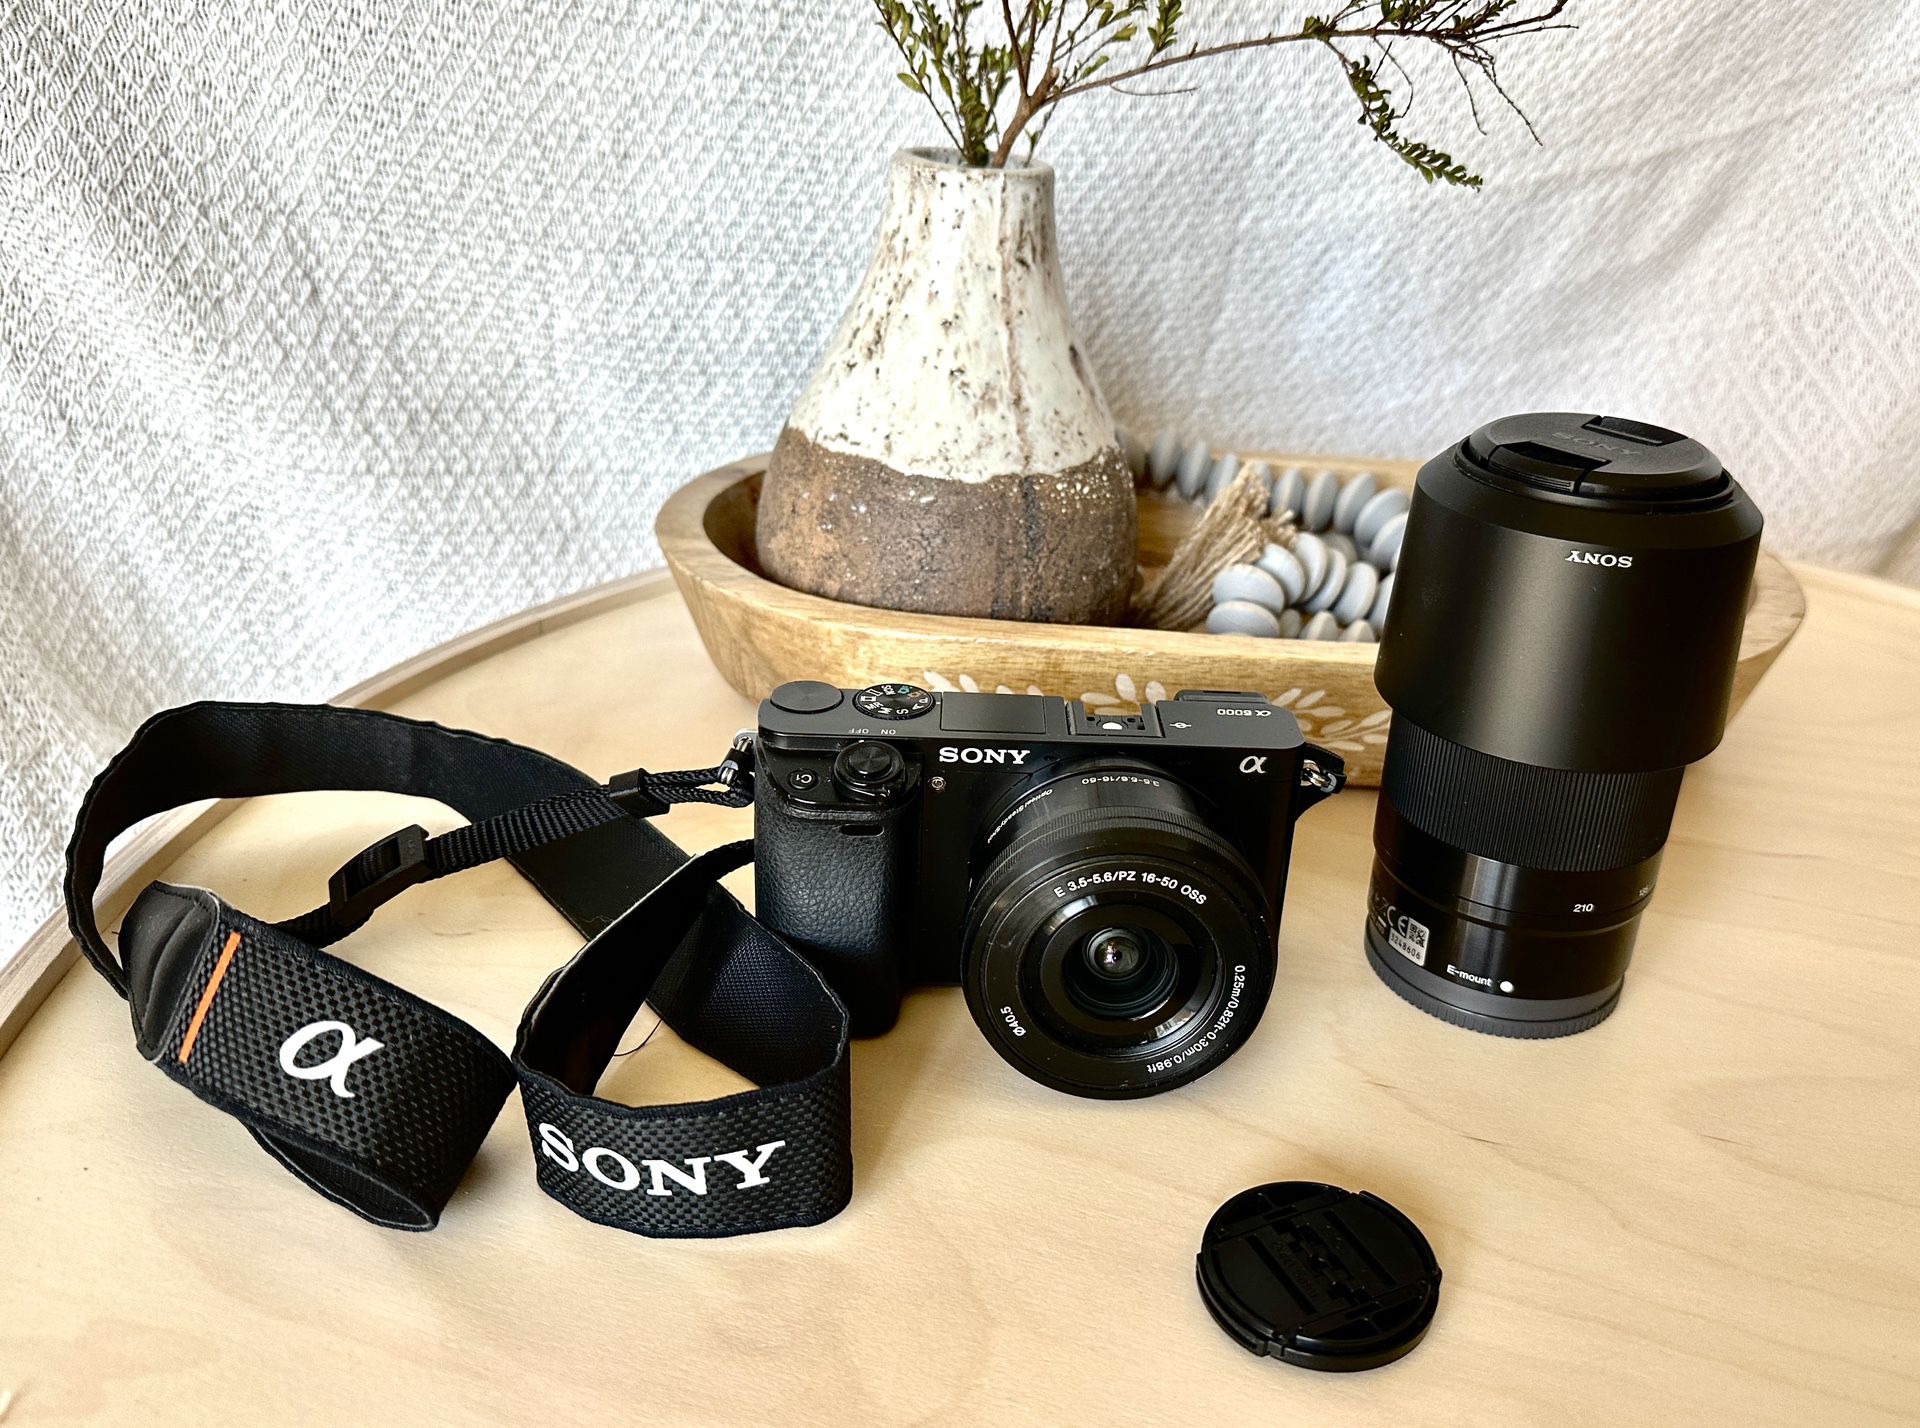 Sony Alpha 6000 Interchangeable Lens Camera